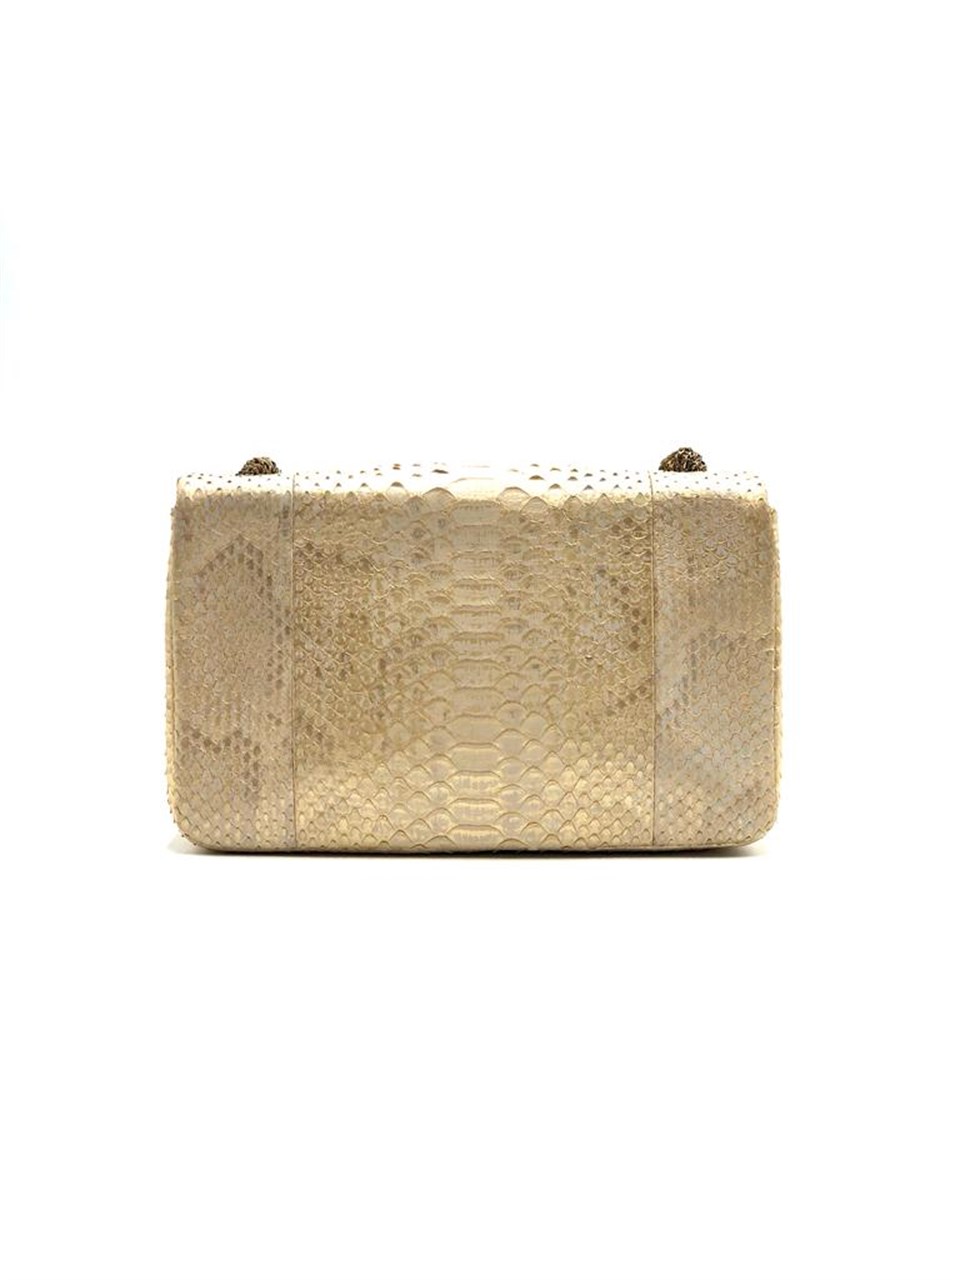 CHANEL Light Gold Python Westminster Pearls Flap Bag